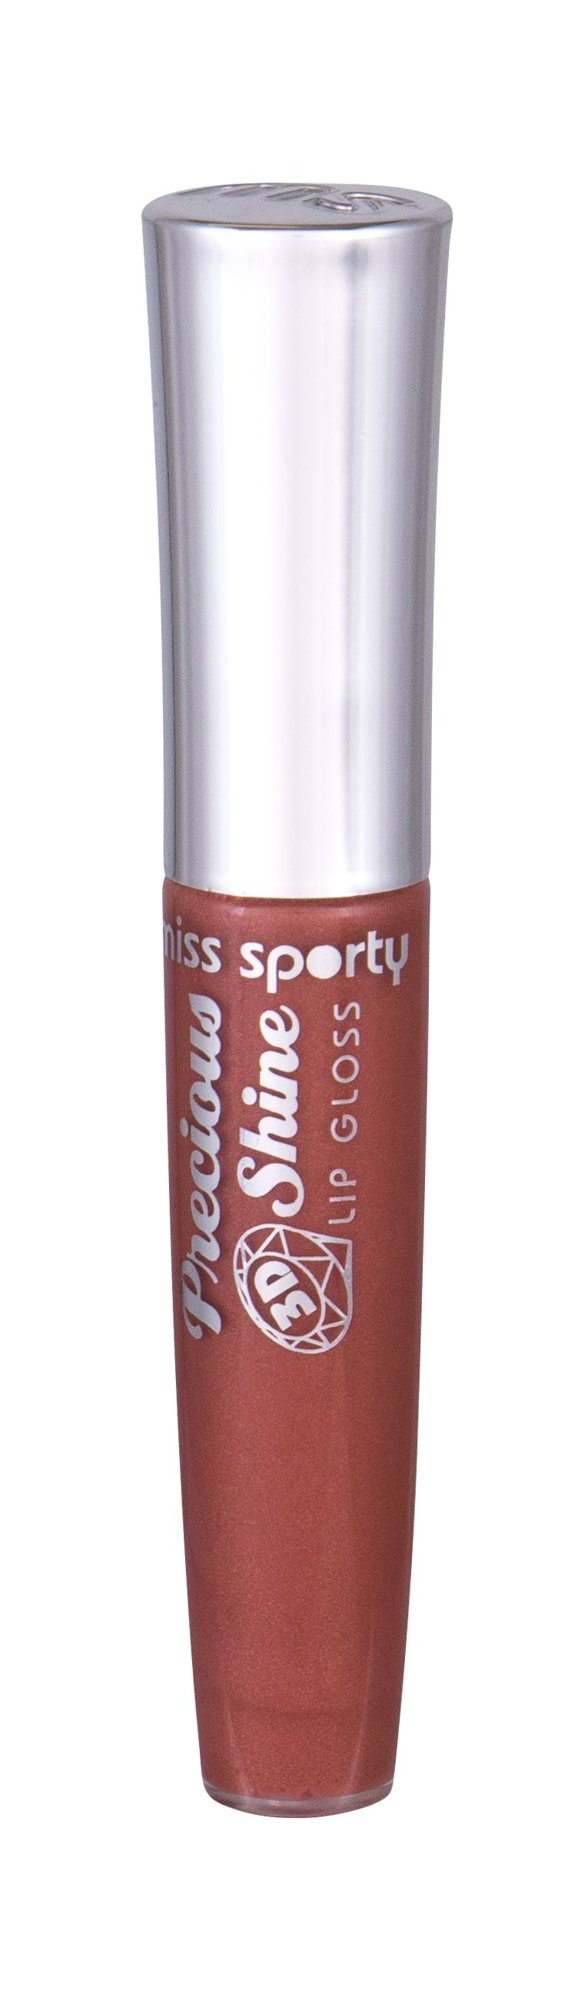 Miss Sporty Precious Shine 3D lūpų blizgesys